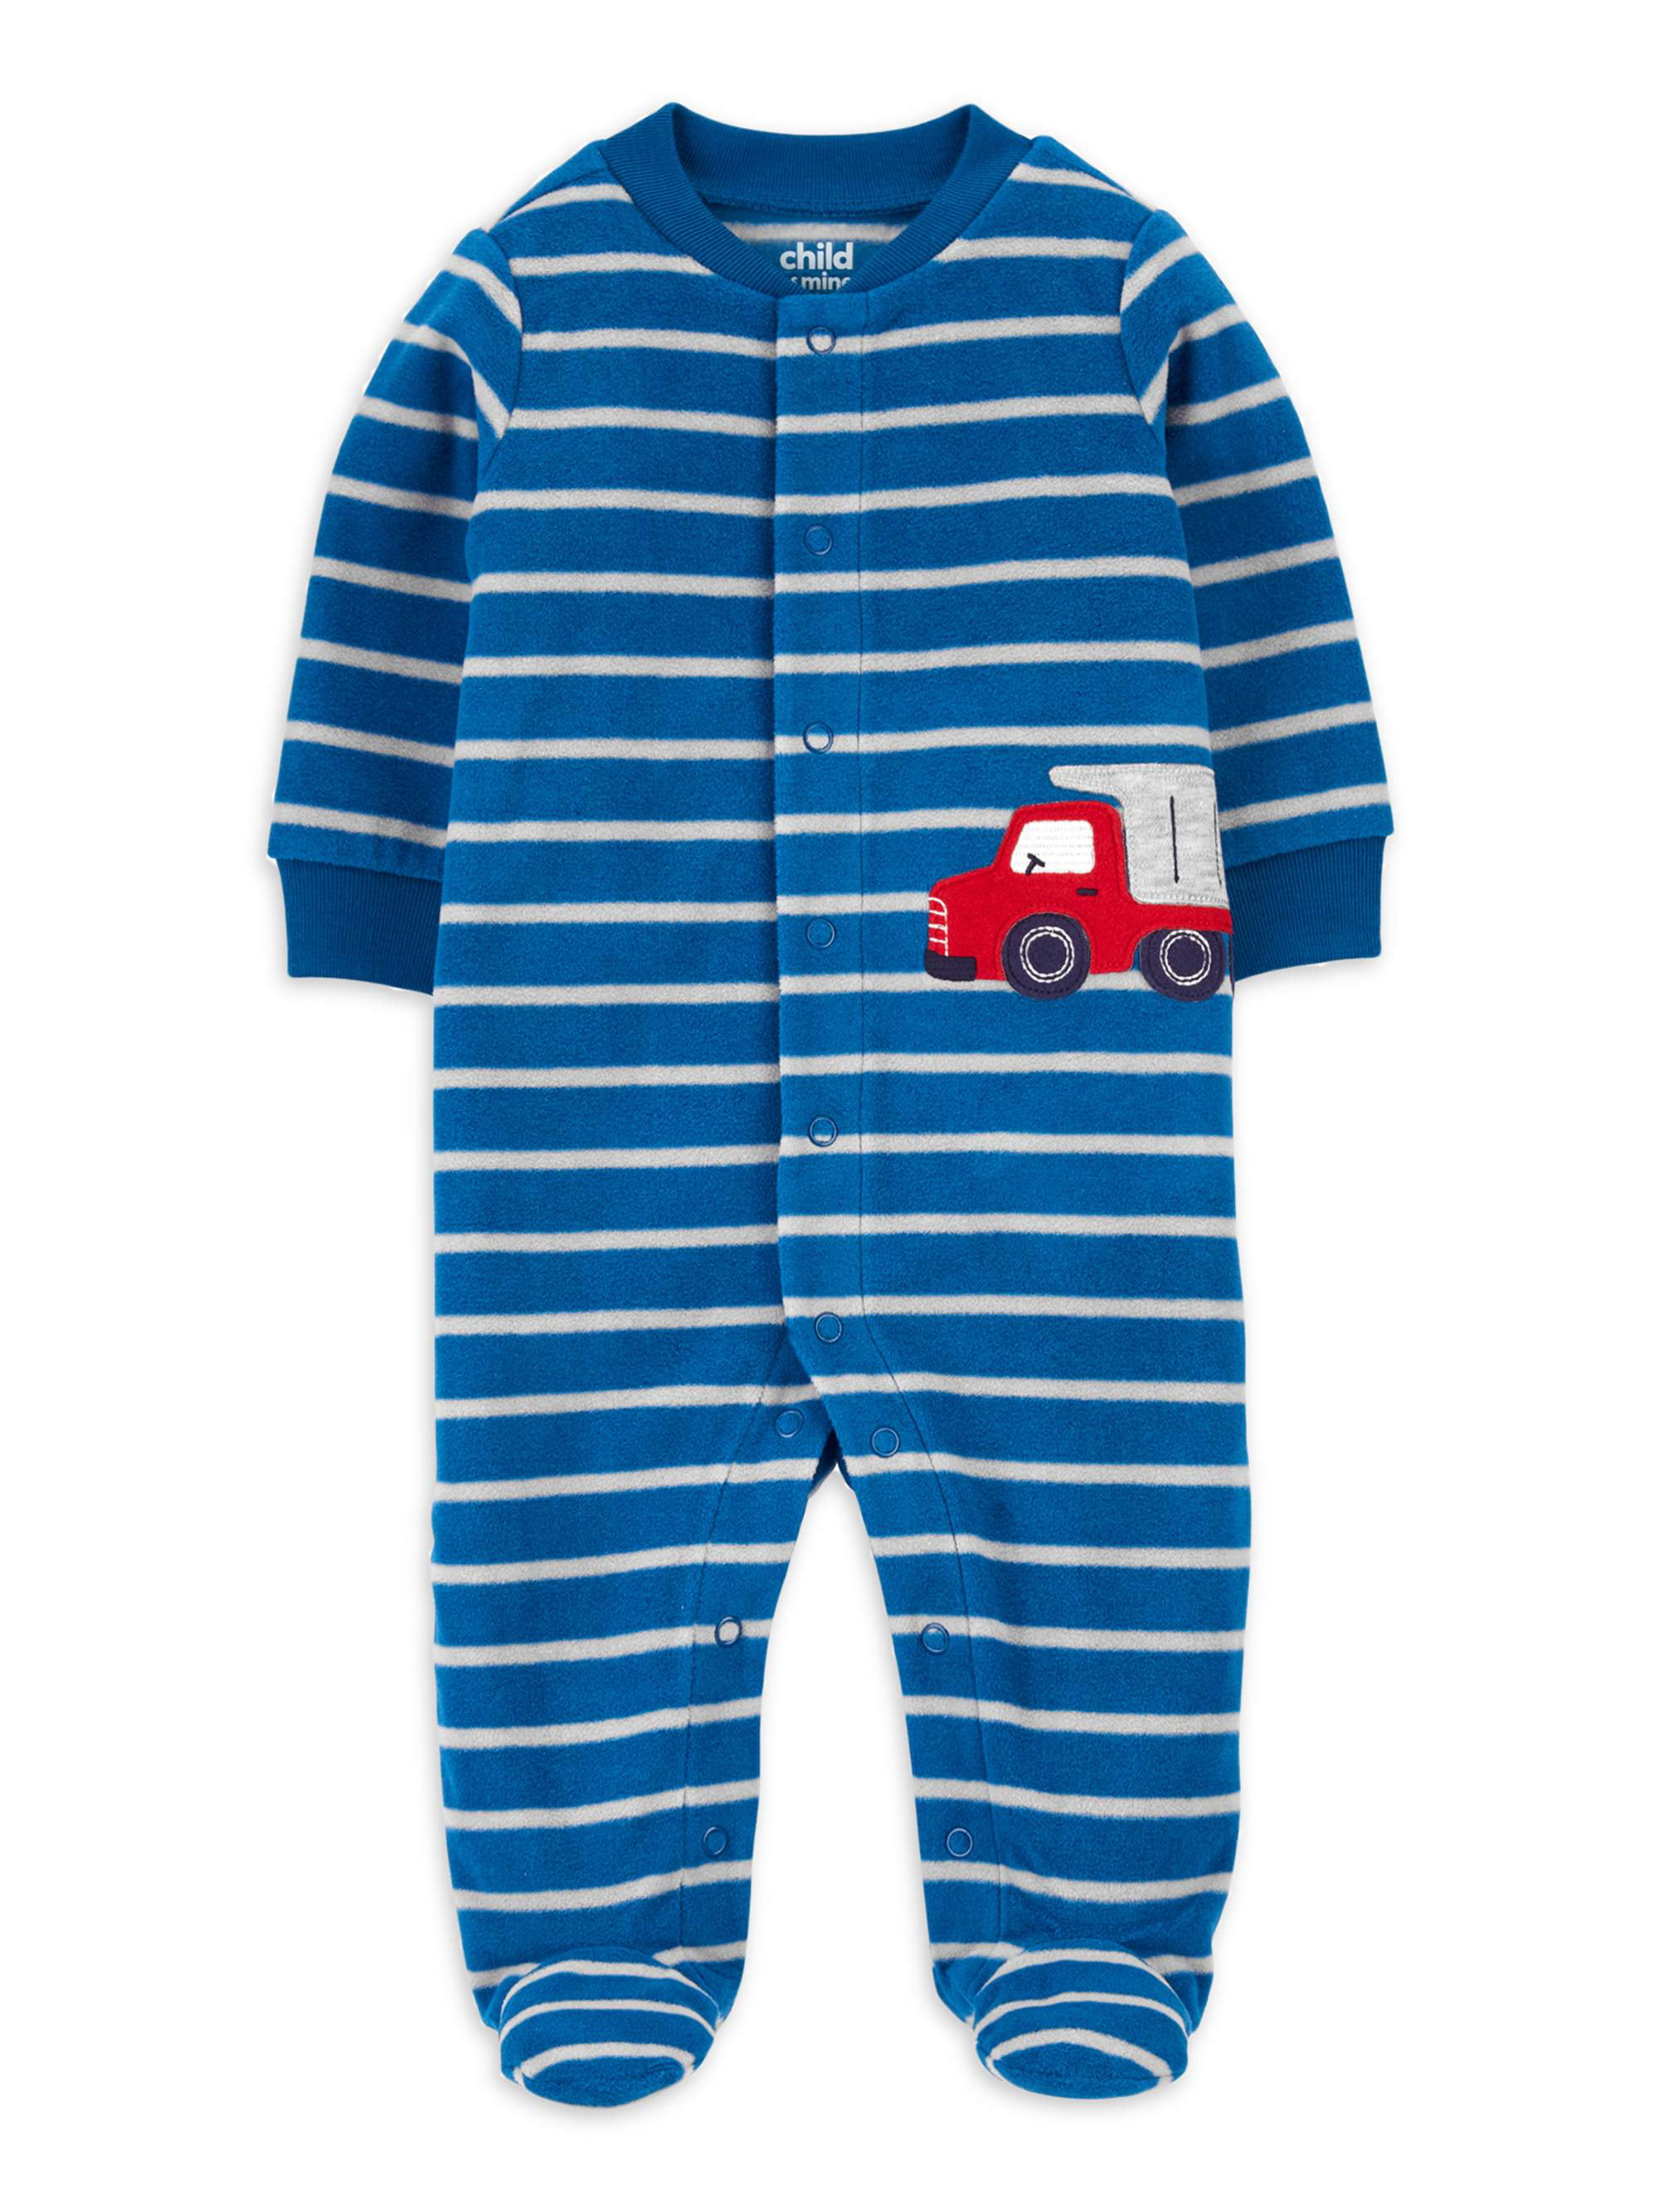 Carters Boys 18 Months 2-Pack Blue Green Spaceship Play Romper Pajamas Bodysuits 